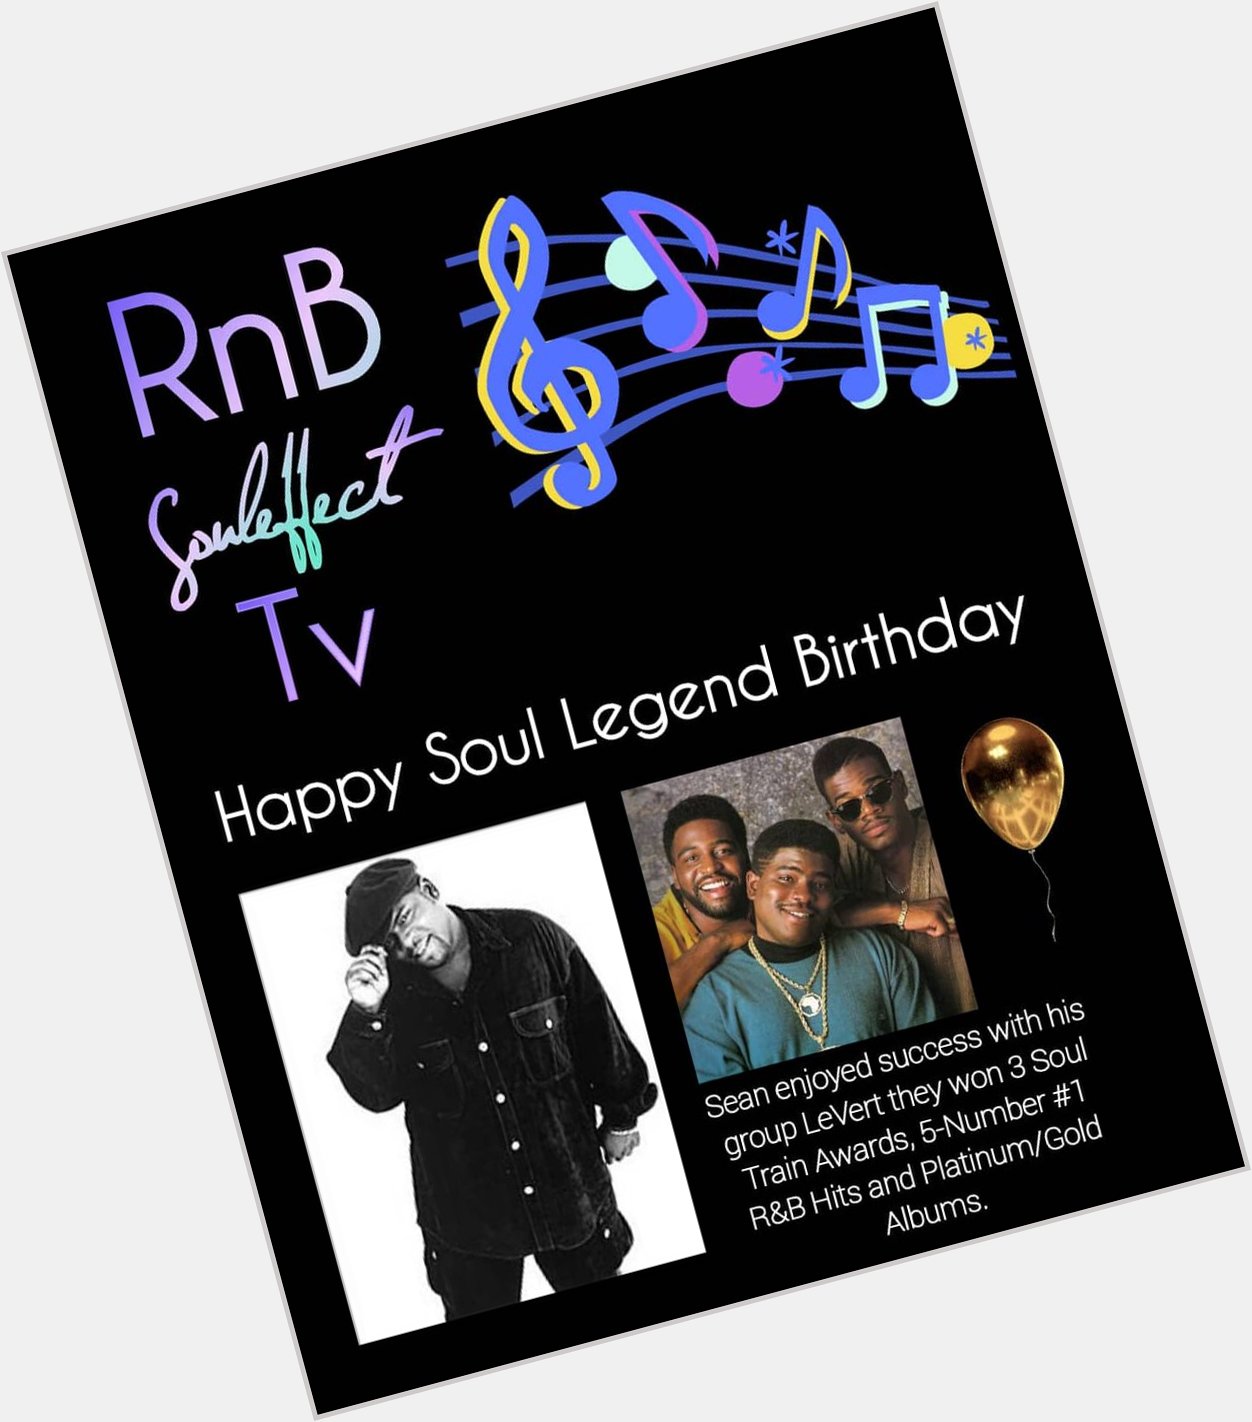 Happy Soul Legend Birthday 
Sean LeVert  